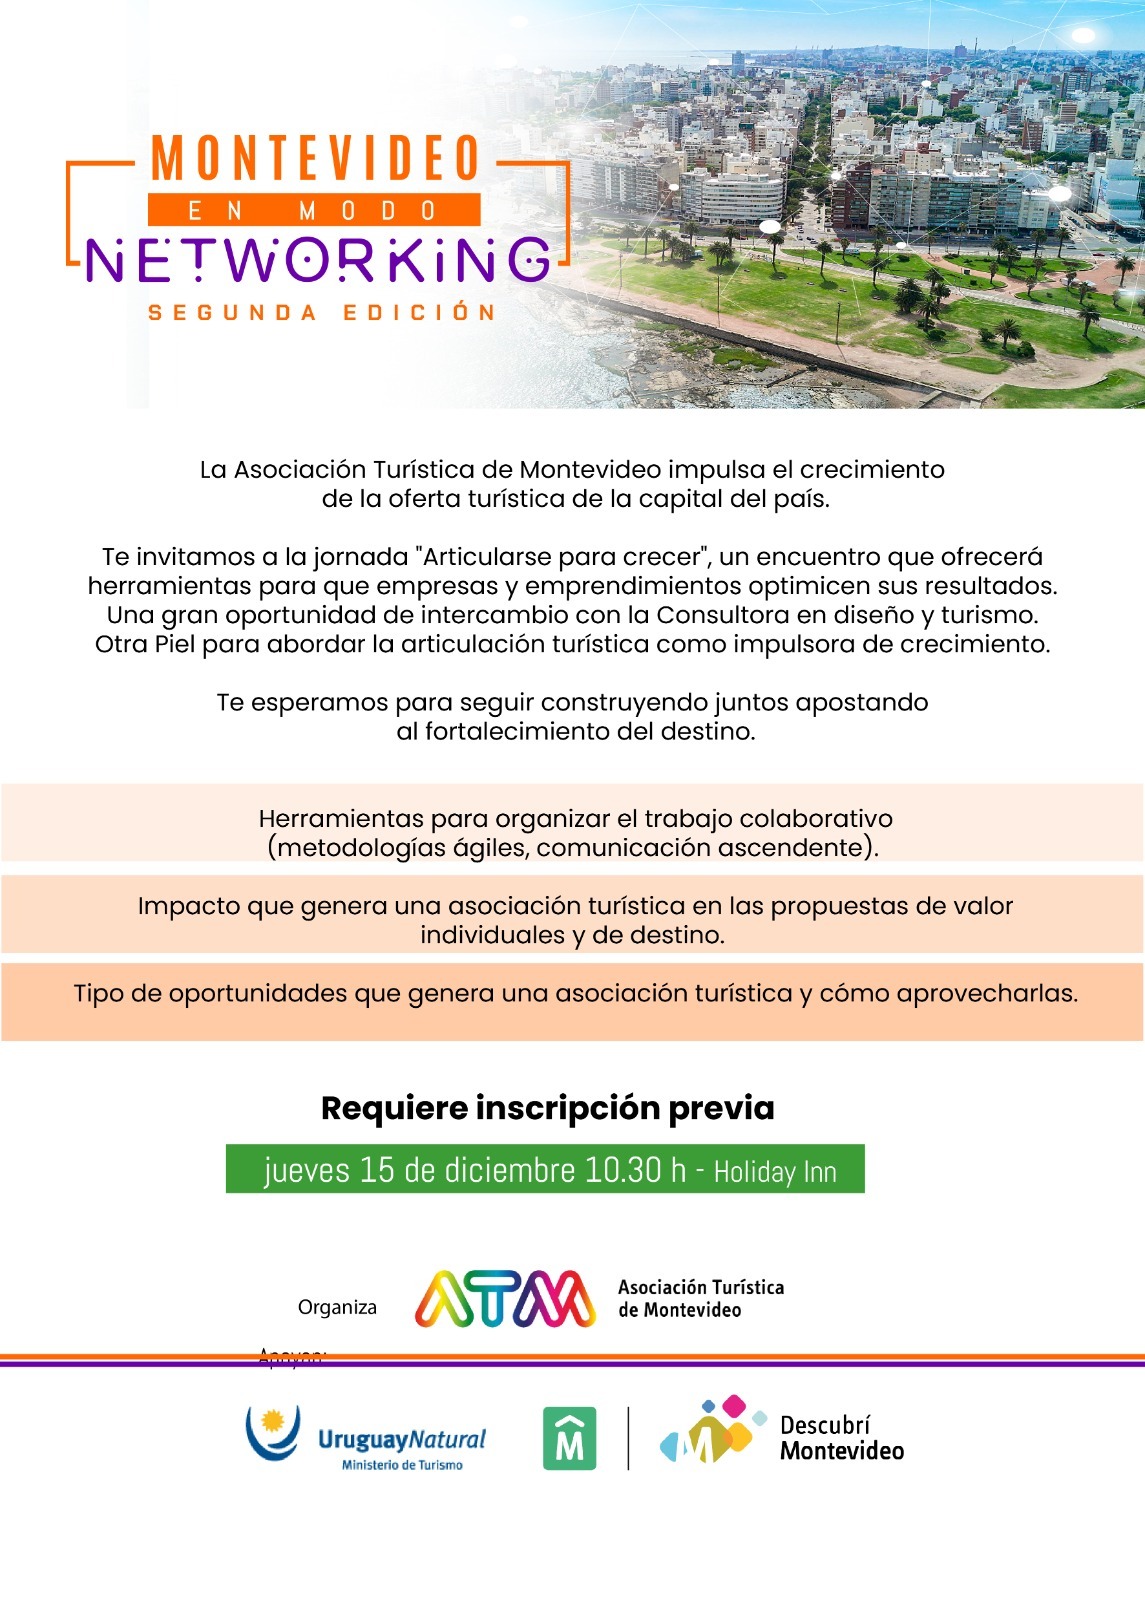 2º edición de “Montevideo en modo Networking”